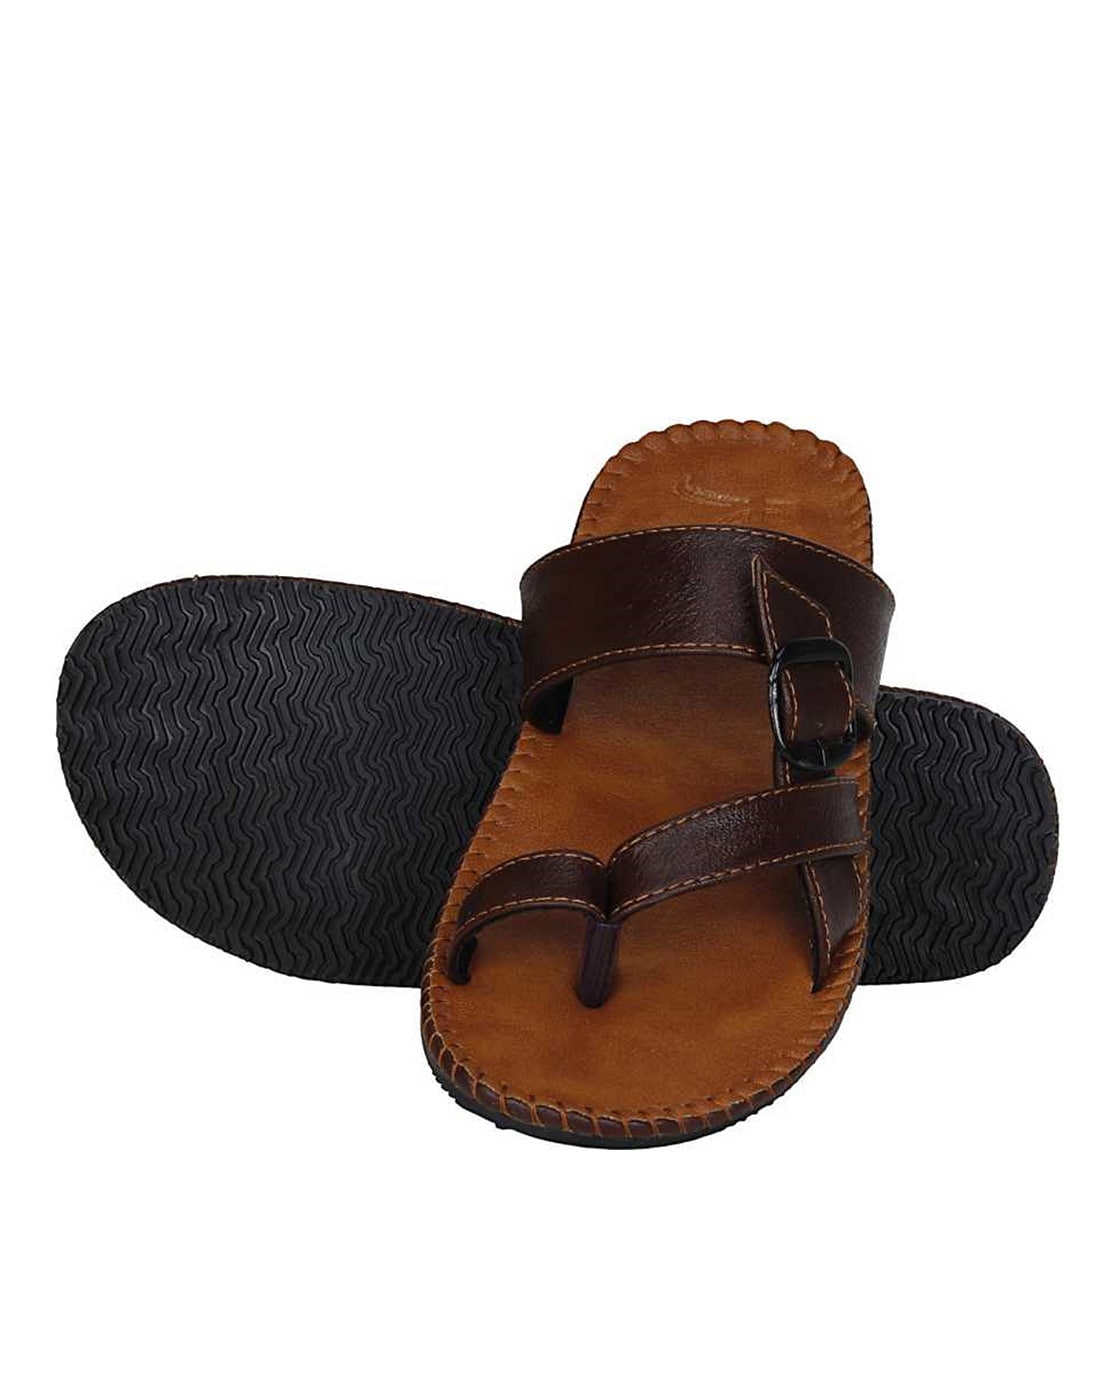 Buy Tan Flip Flop \u0026 Slippers for Men by 